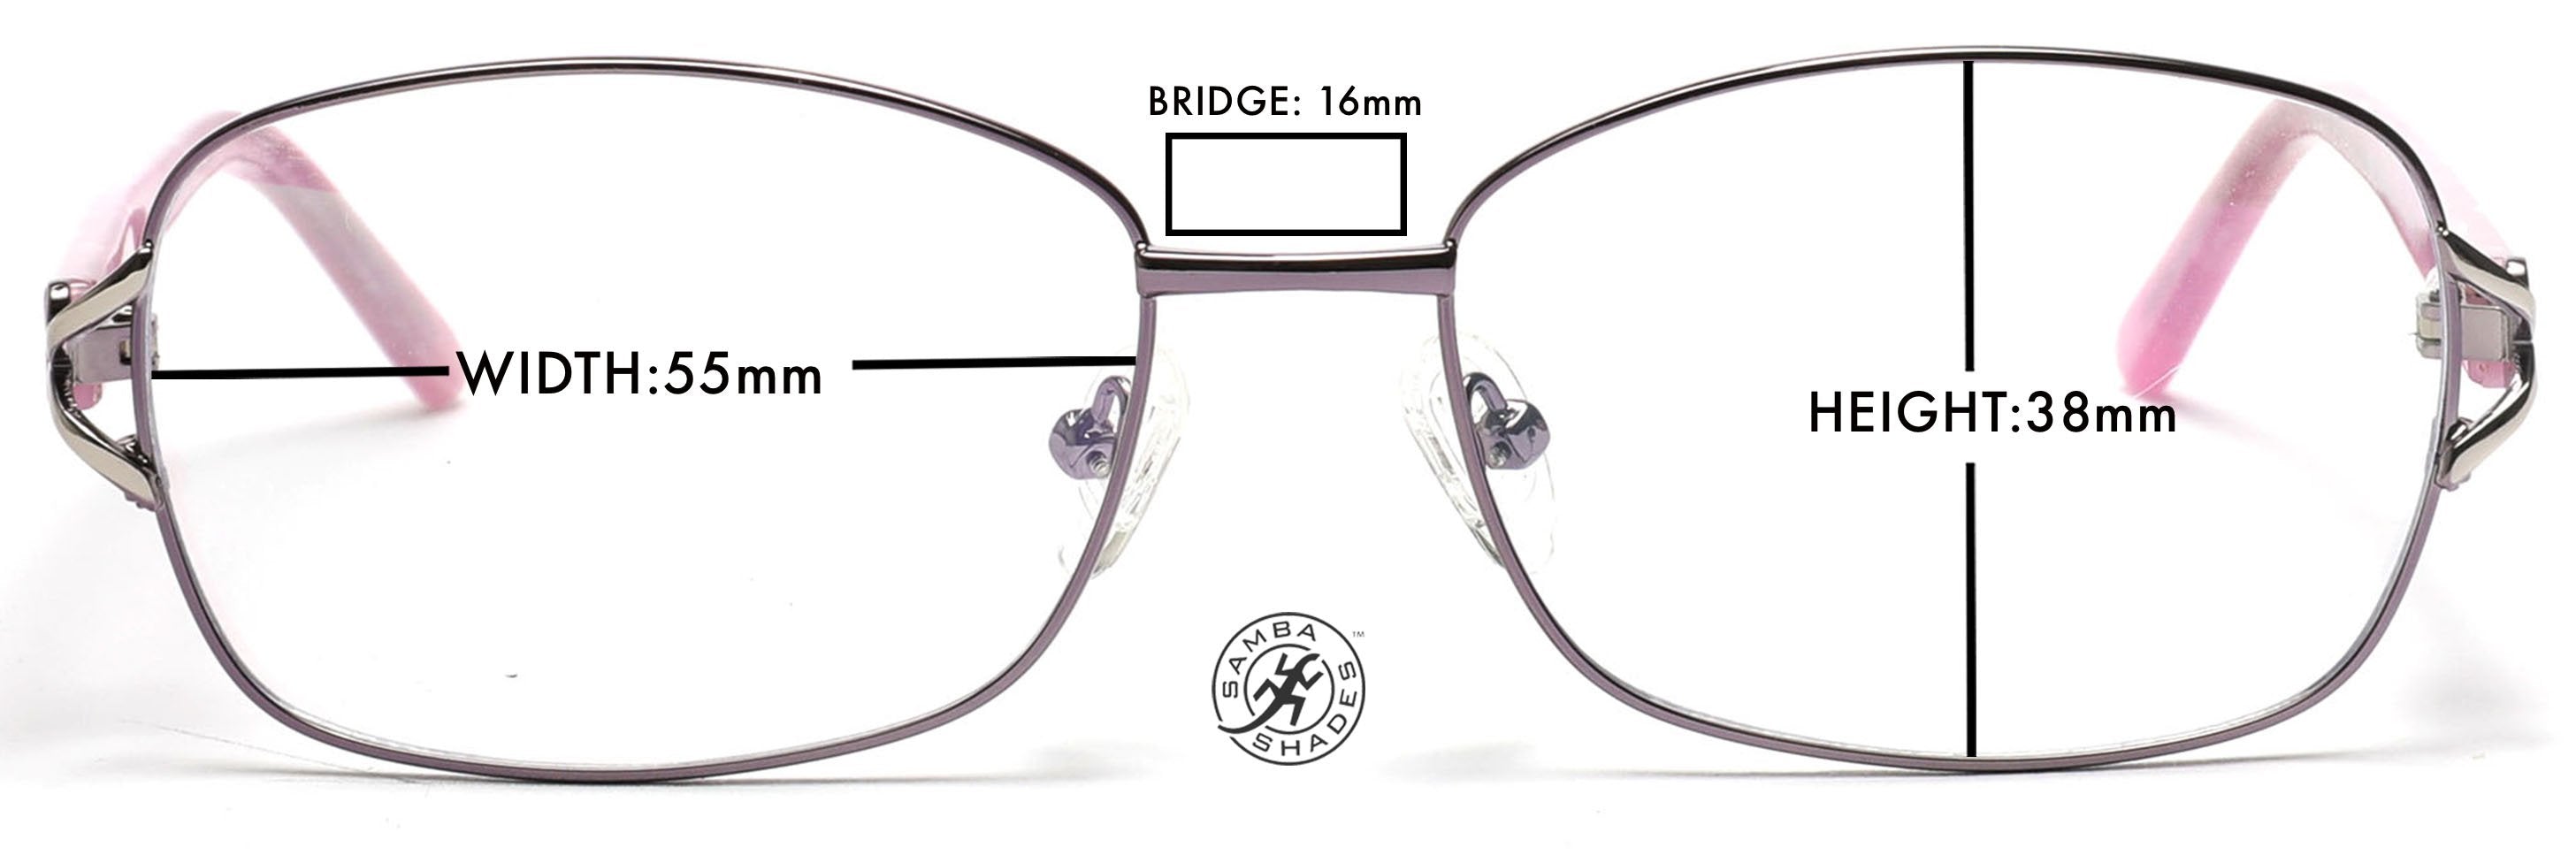 Tango Optics Metal Optical Eyeglasses Frame Luxe Stainless Steel Virginia Apgar Square Purple Oval For Prescription Lens-Samba Shades